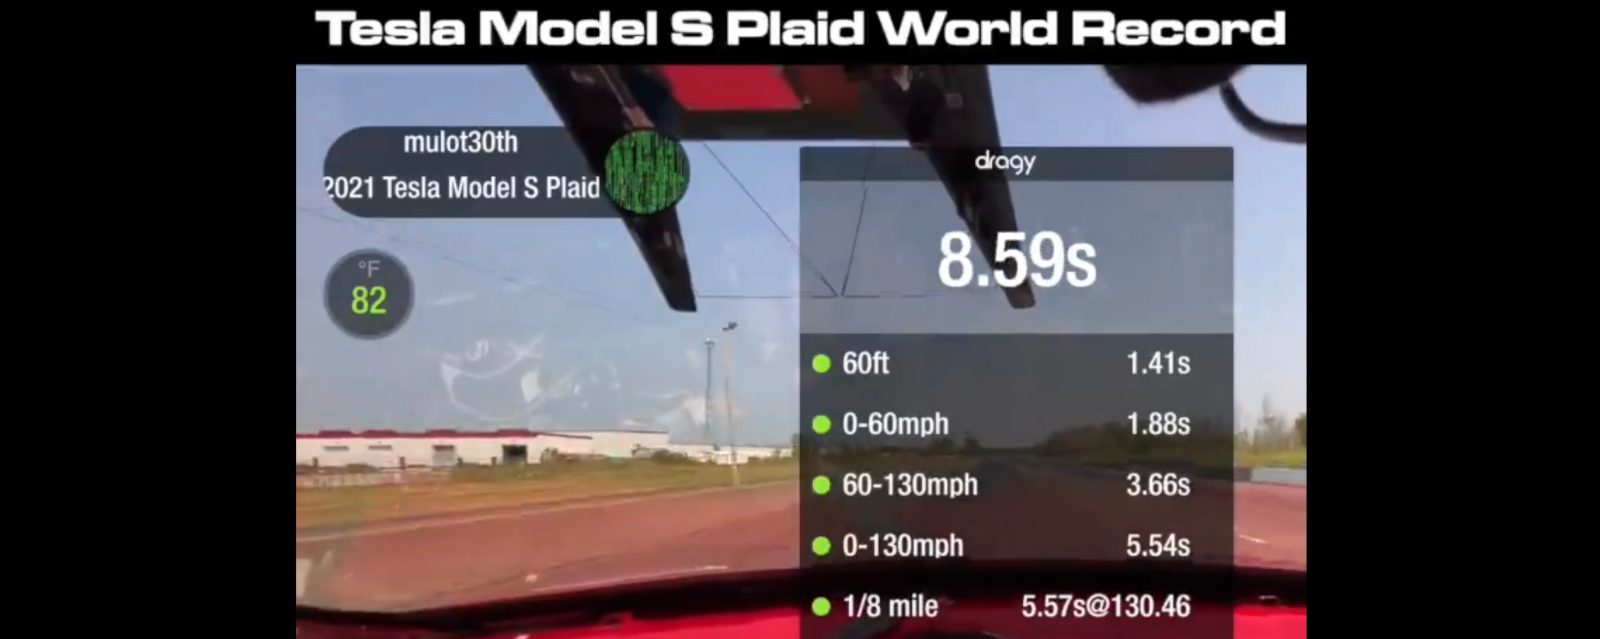 Tesla model S plaid record